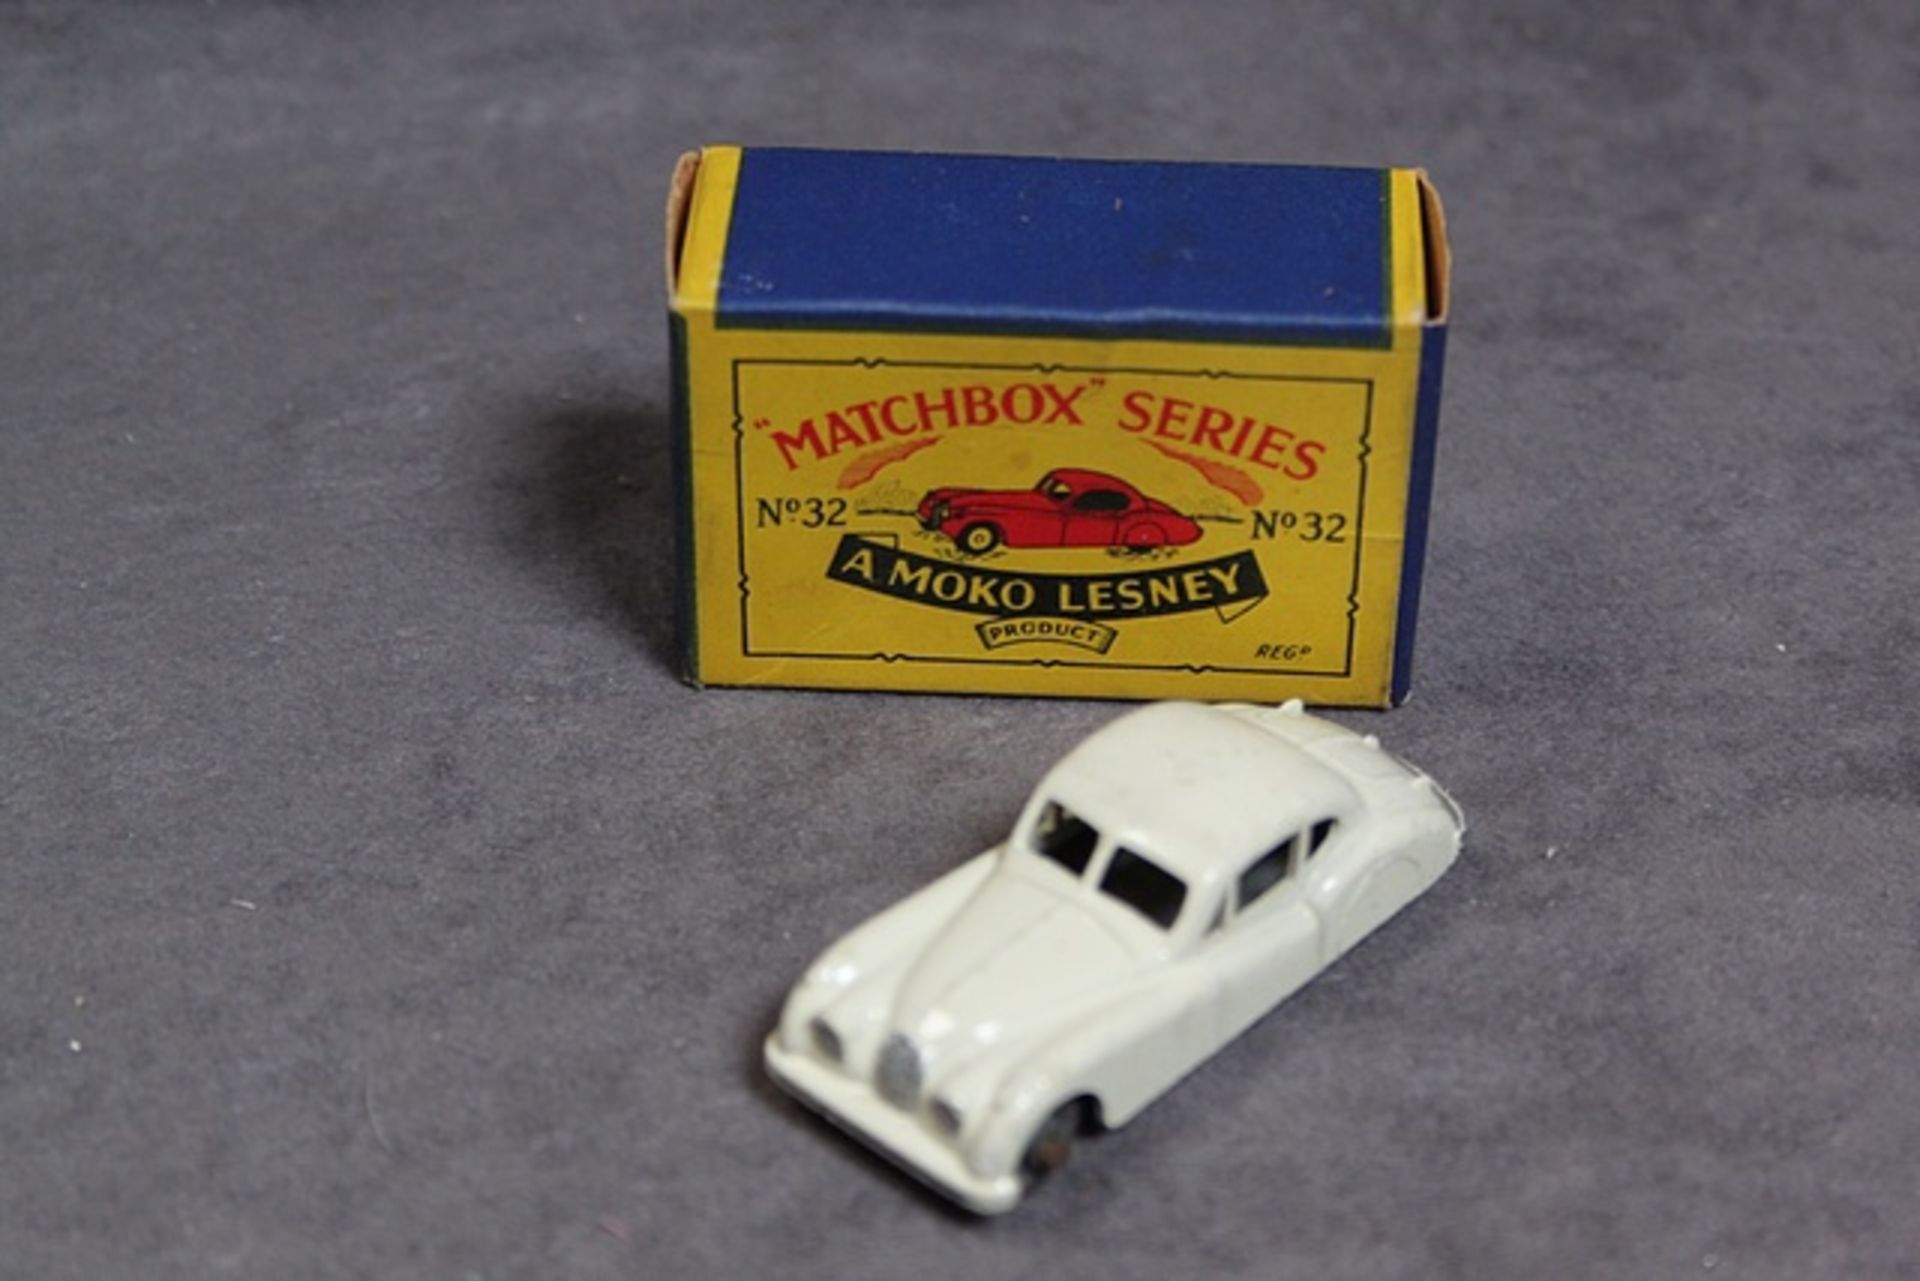 Matchbox Moko Lesney Diecast #32a Jaguar XK 140 off white model mint slight box rubbing on roof in - Image 3 of 3